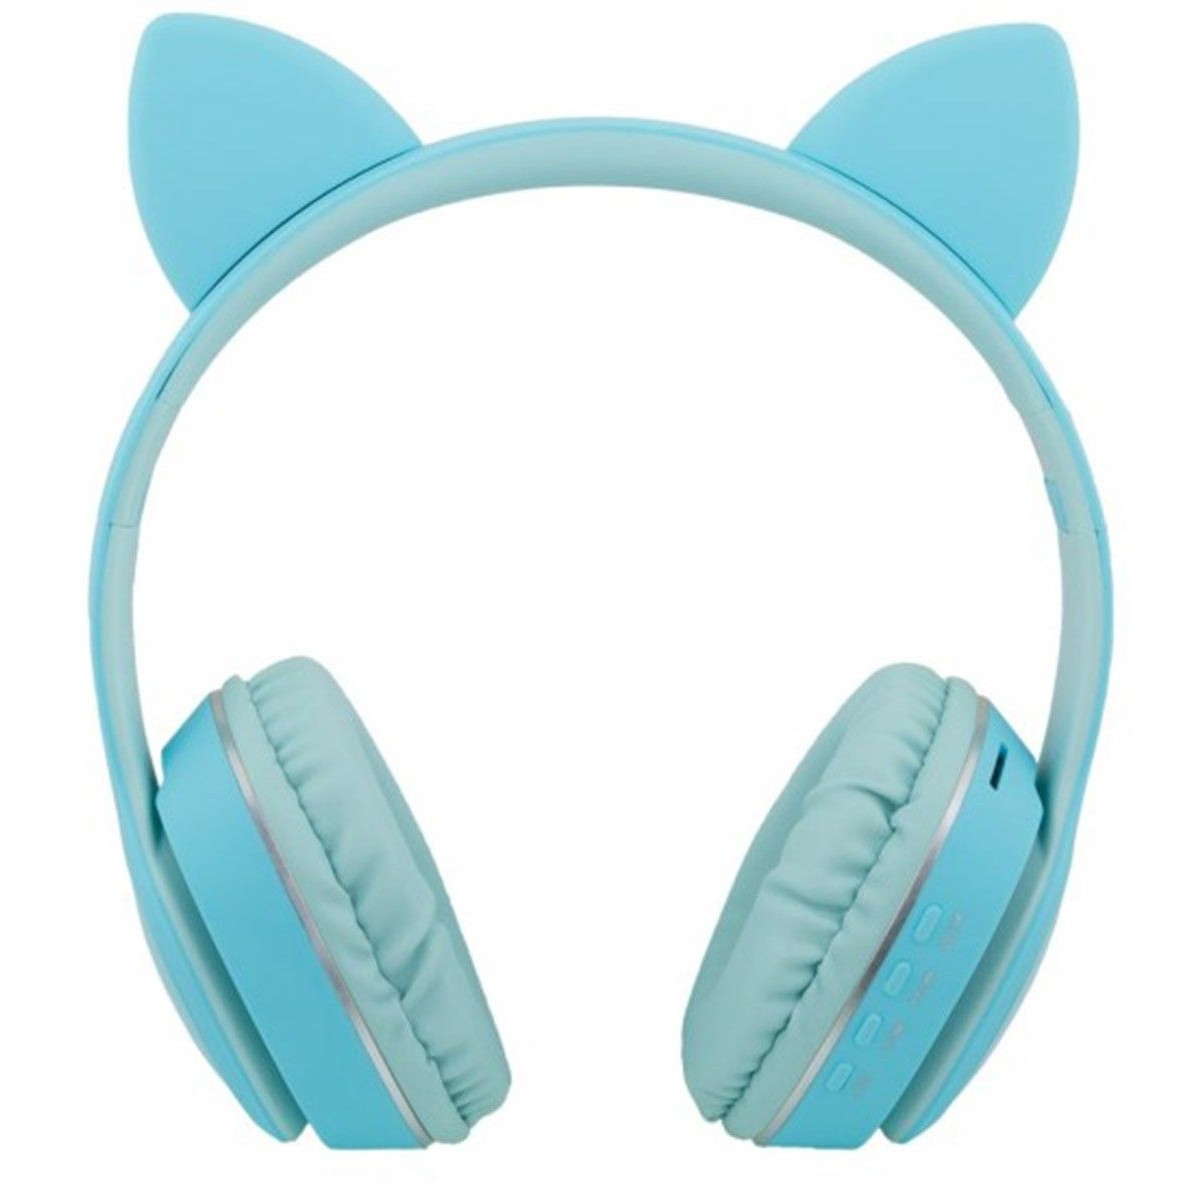 Cascos Auriculares Bluetooth con Orejas de Gato Color Azul